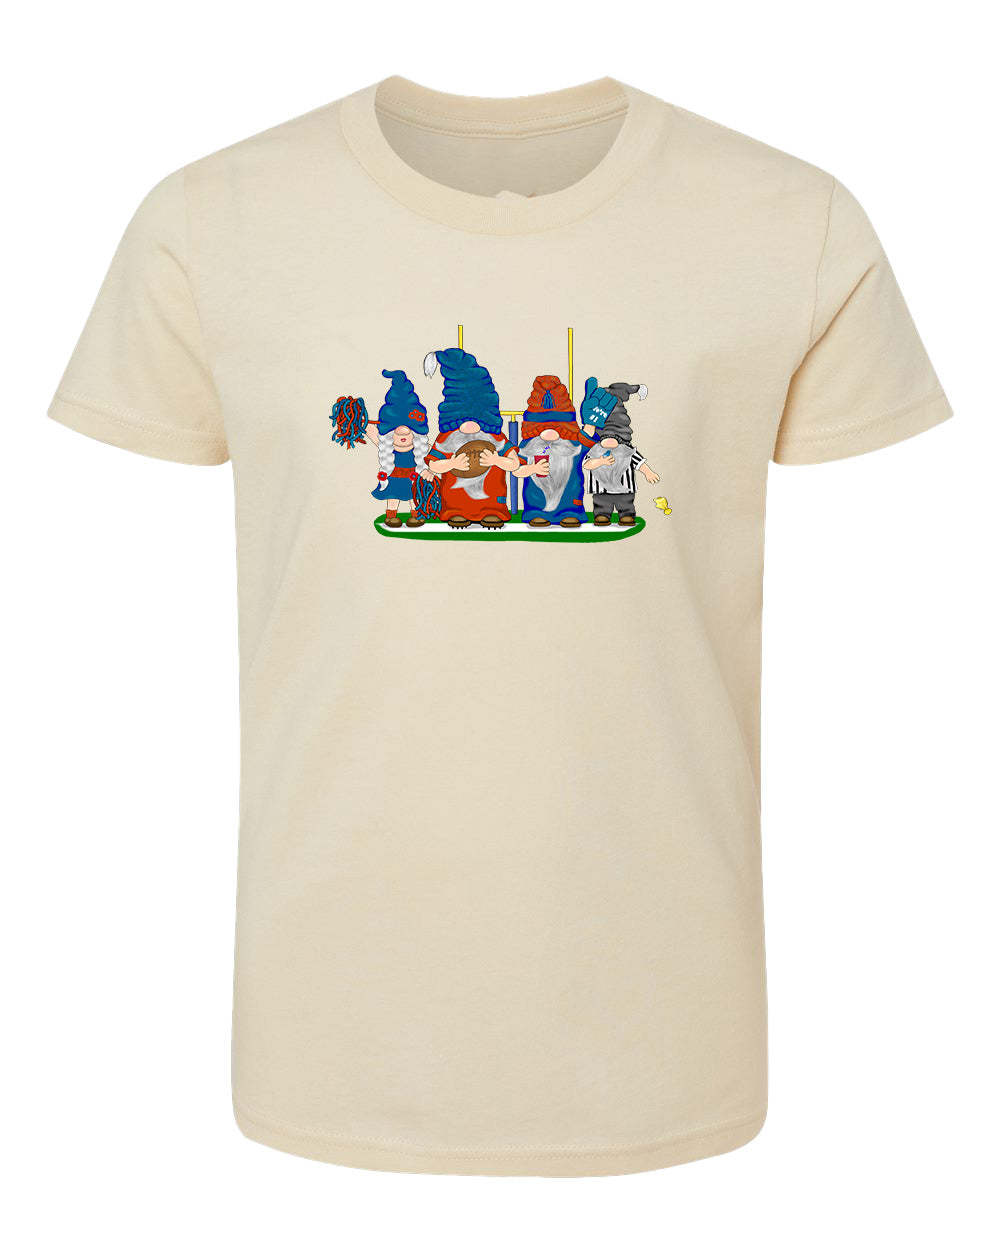 Orange & Blue Football Gnomes  (similar to Chicago) on Kids T-shirt